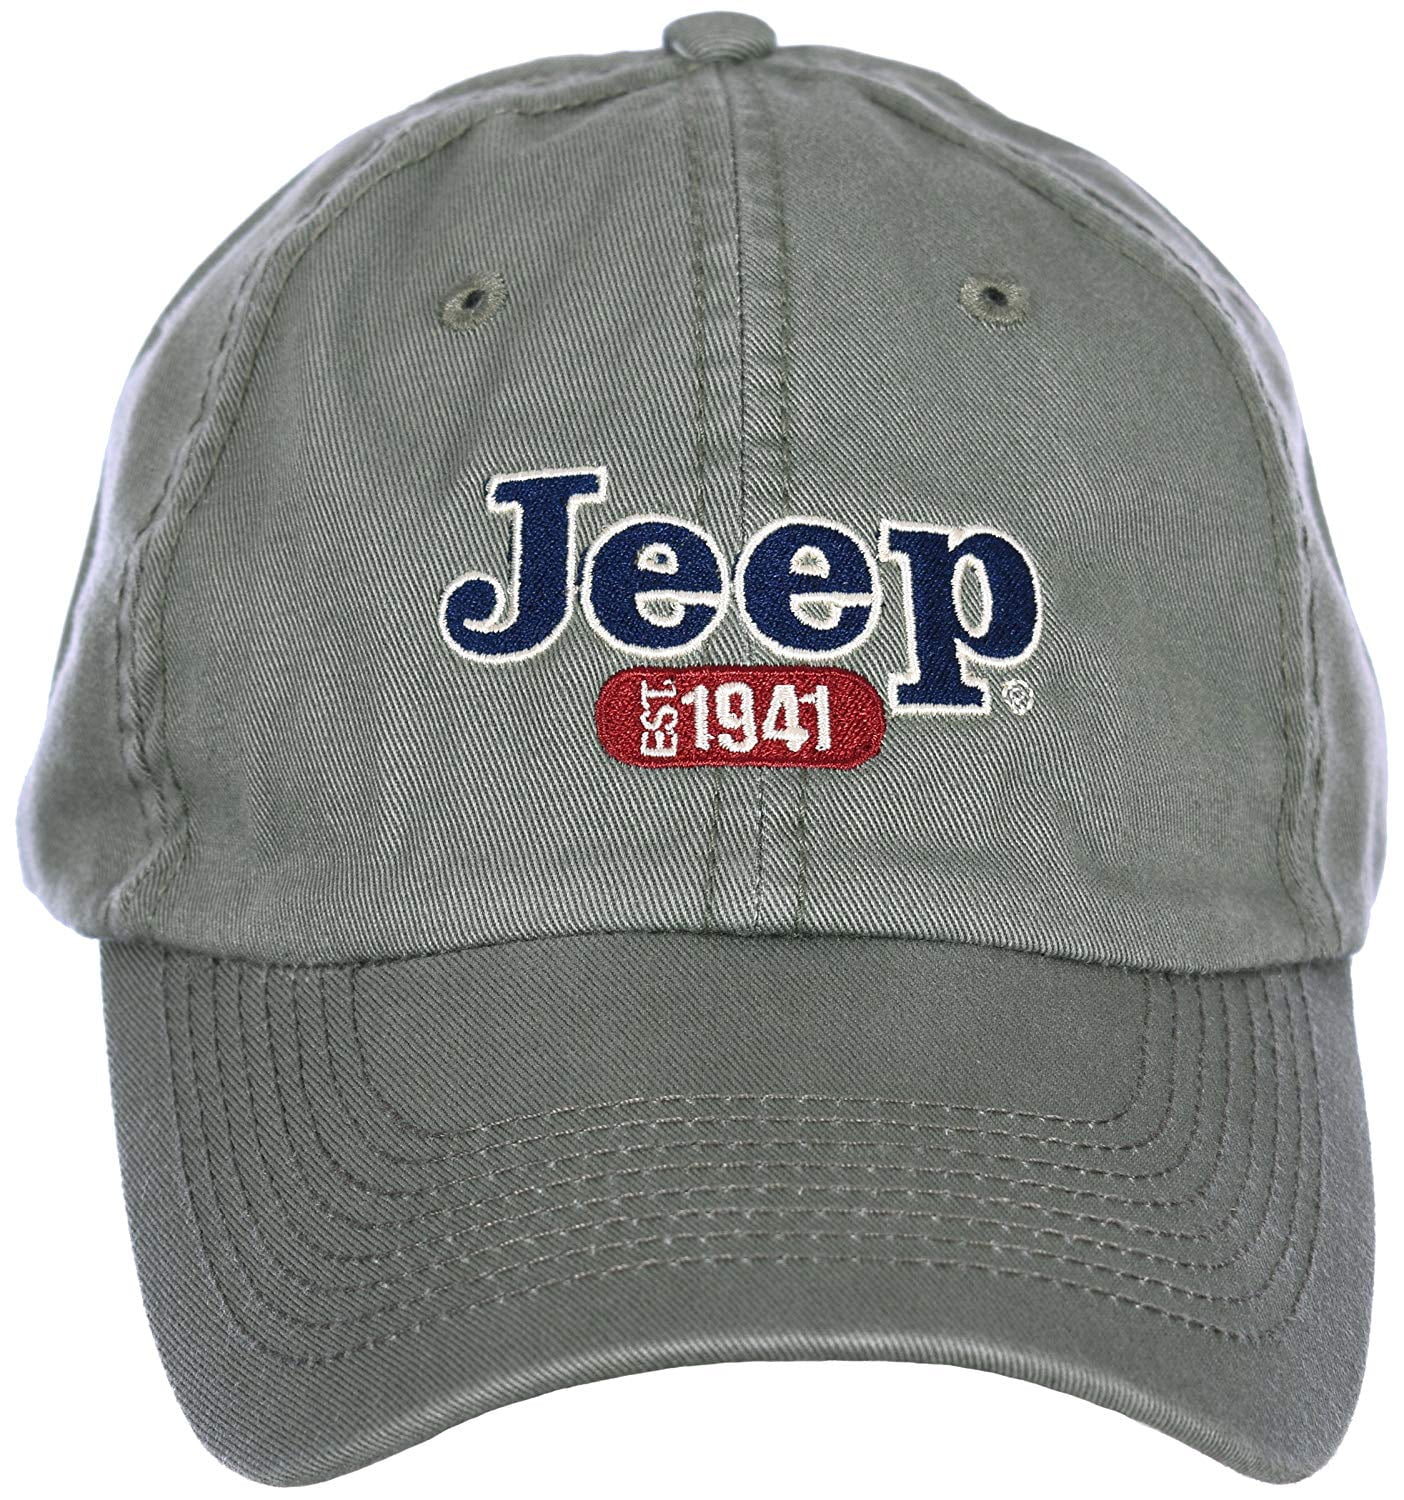 Jeep Star 1941 Baseball Style Hat Cap Dark Green New and Genuine 6002350317 